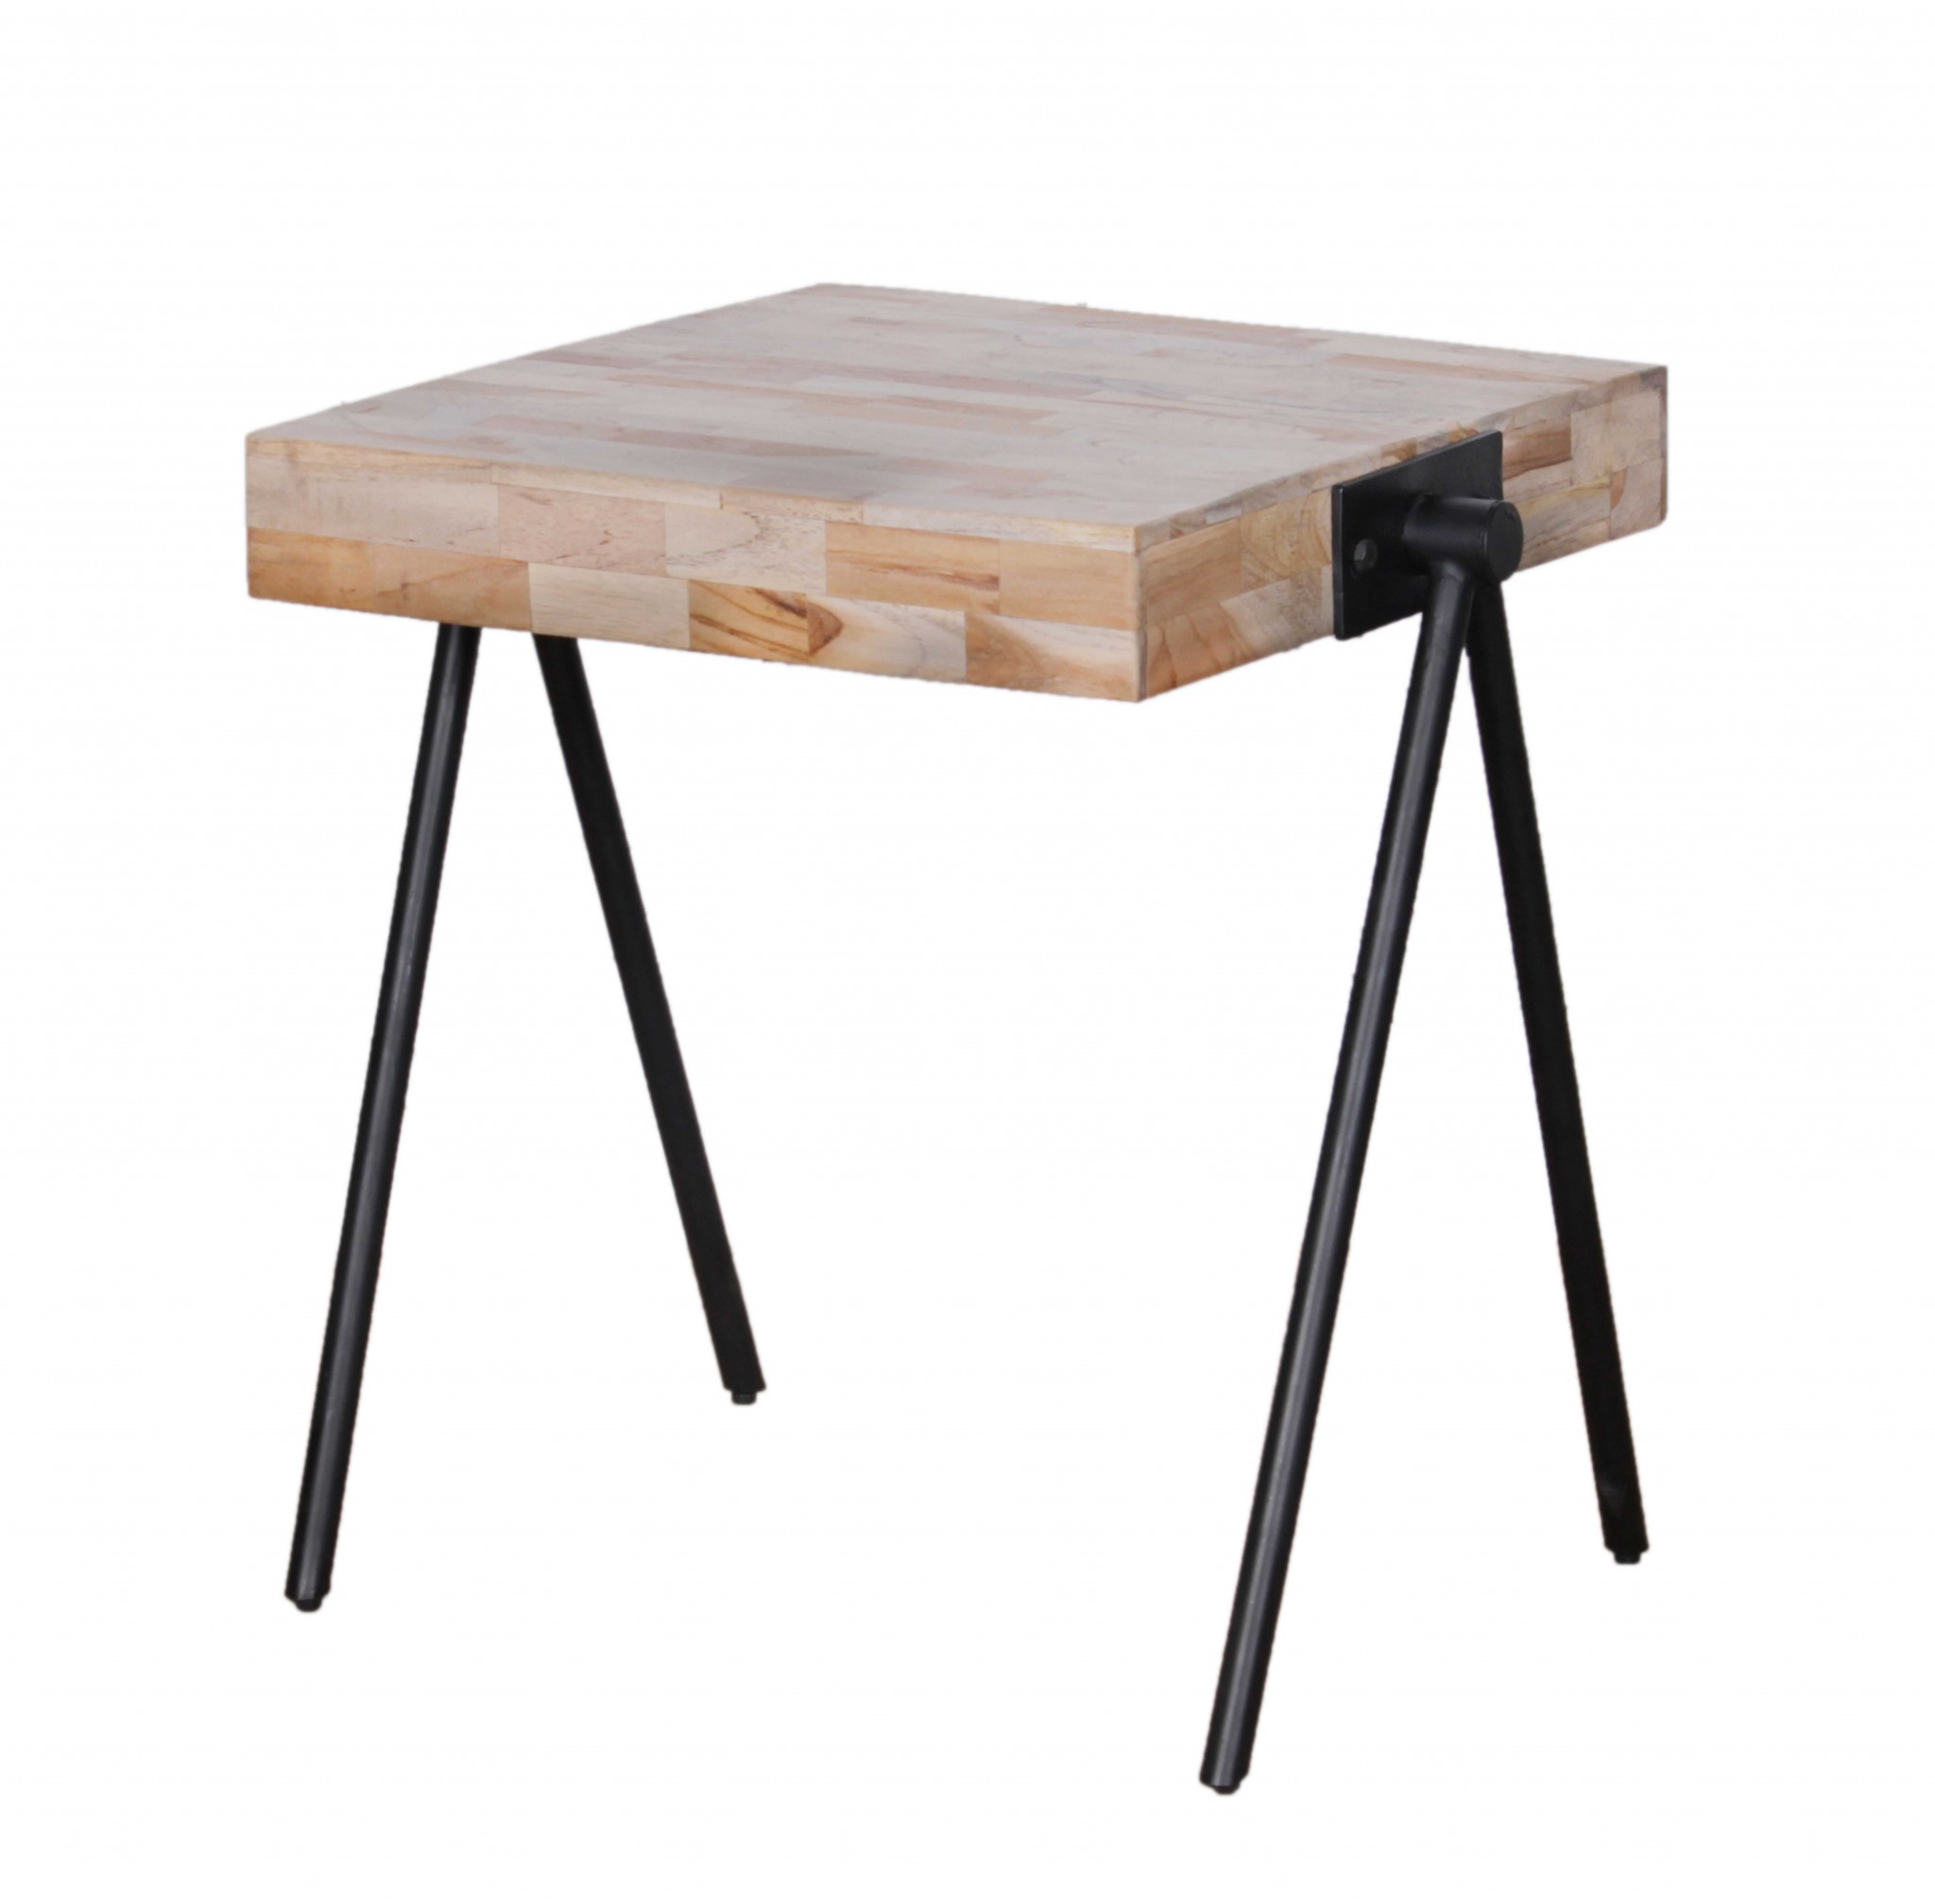 16" X 16" X 20" Multi Wood Metal Side Table